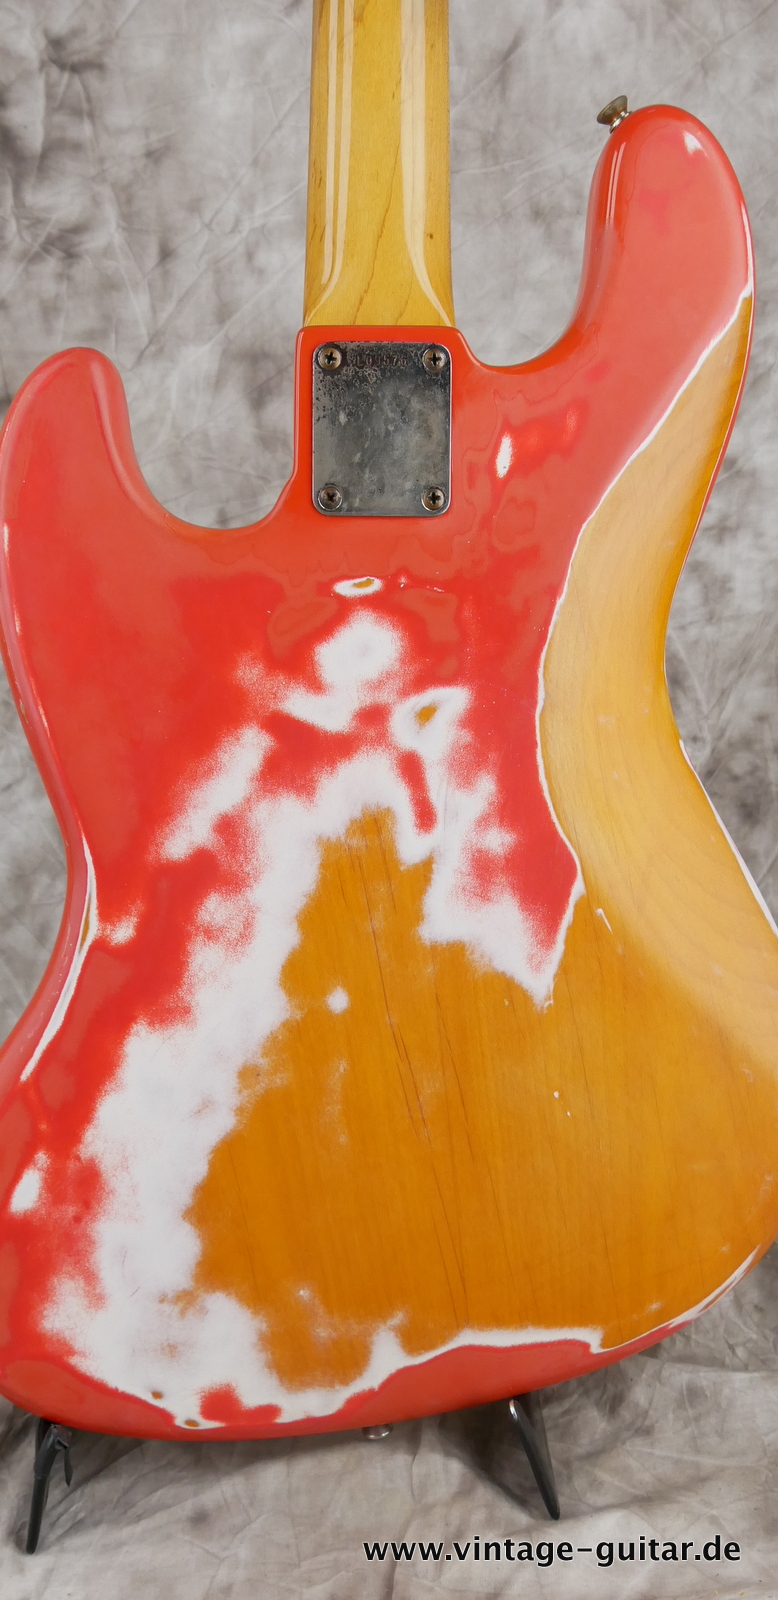 Fender-Jazz-Bass-1963-fiesta-red-1963-004.JPG